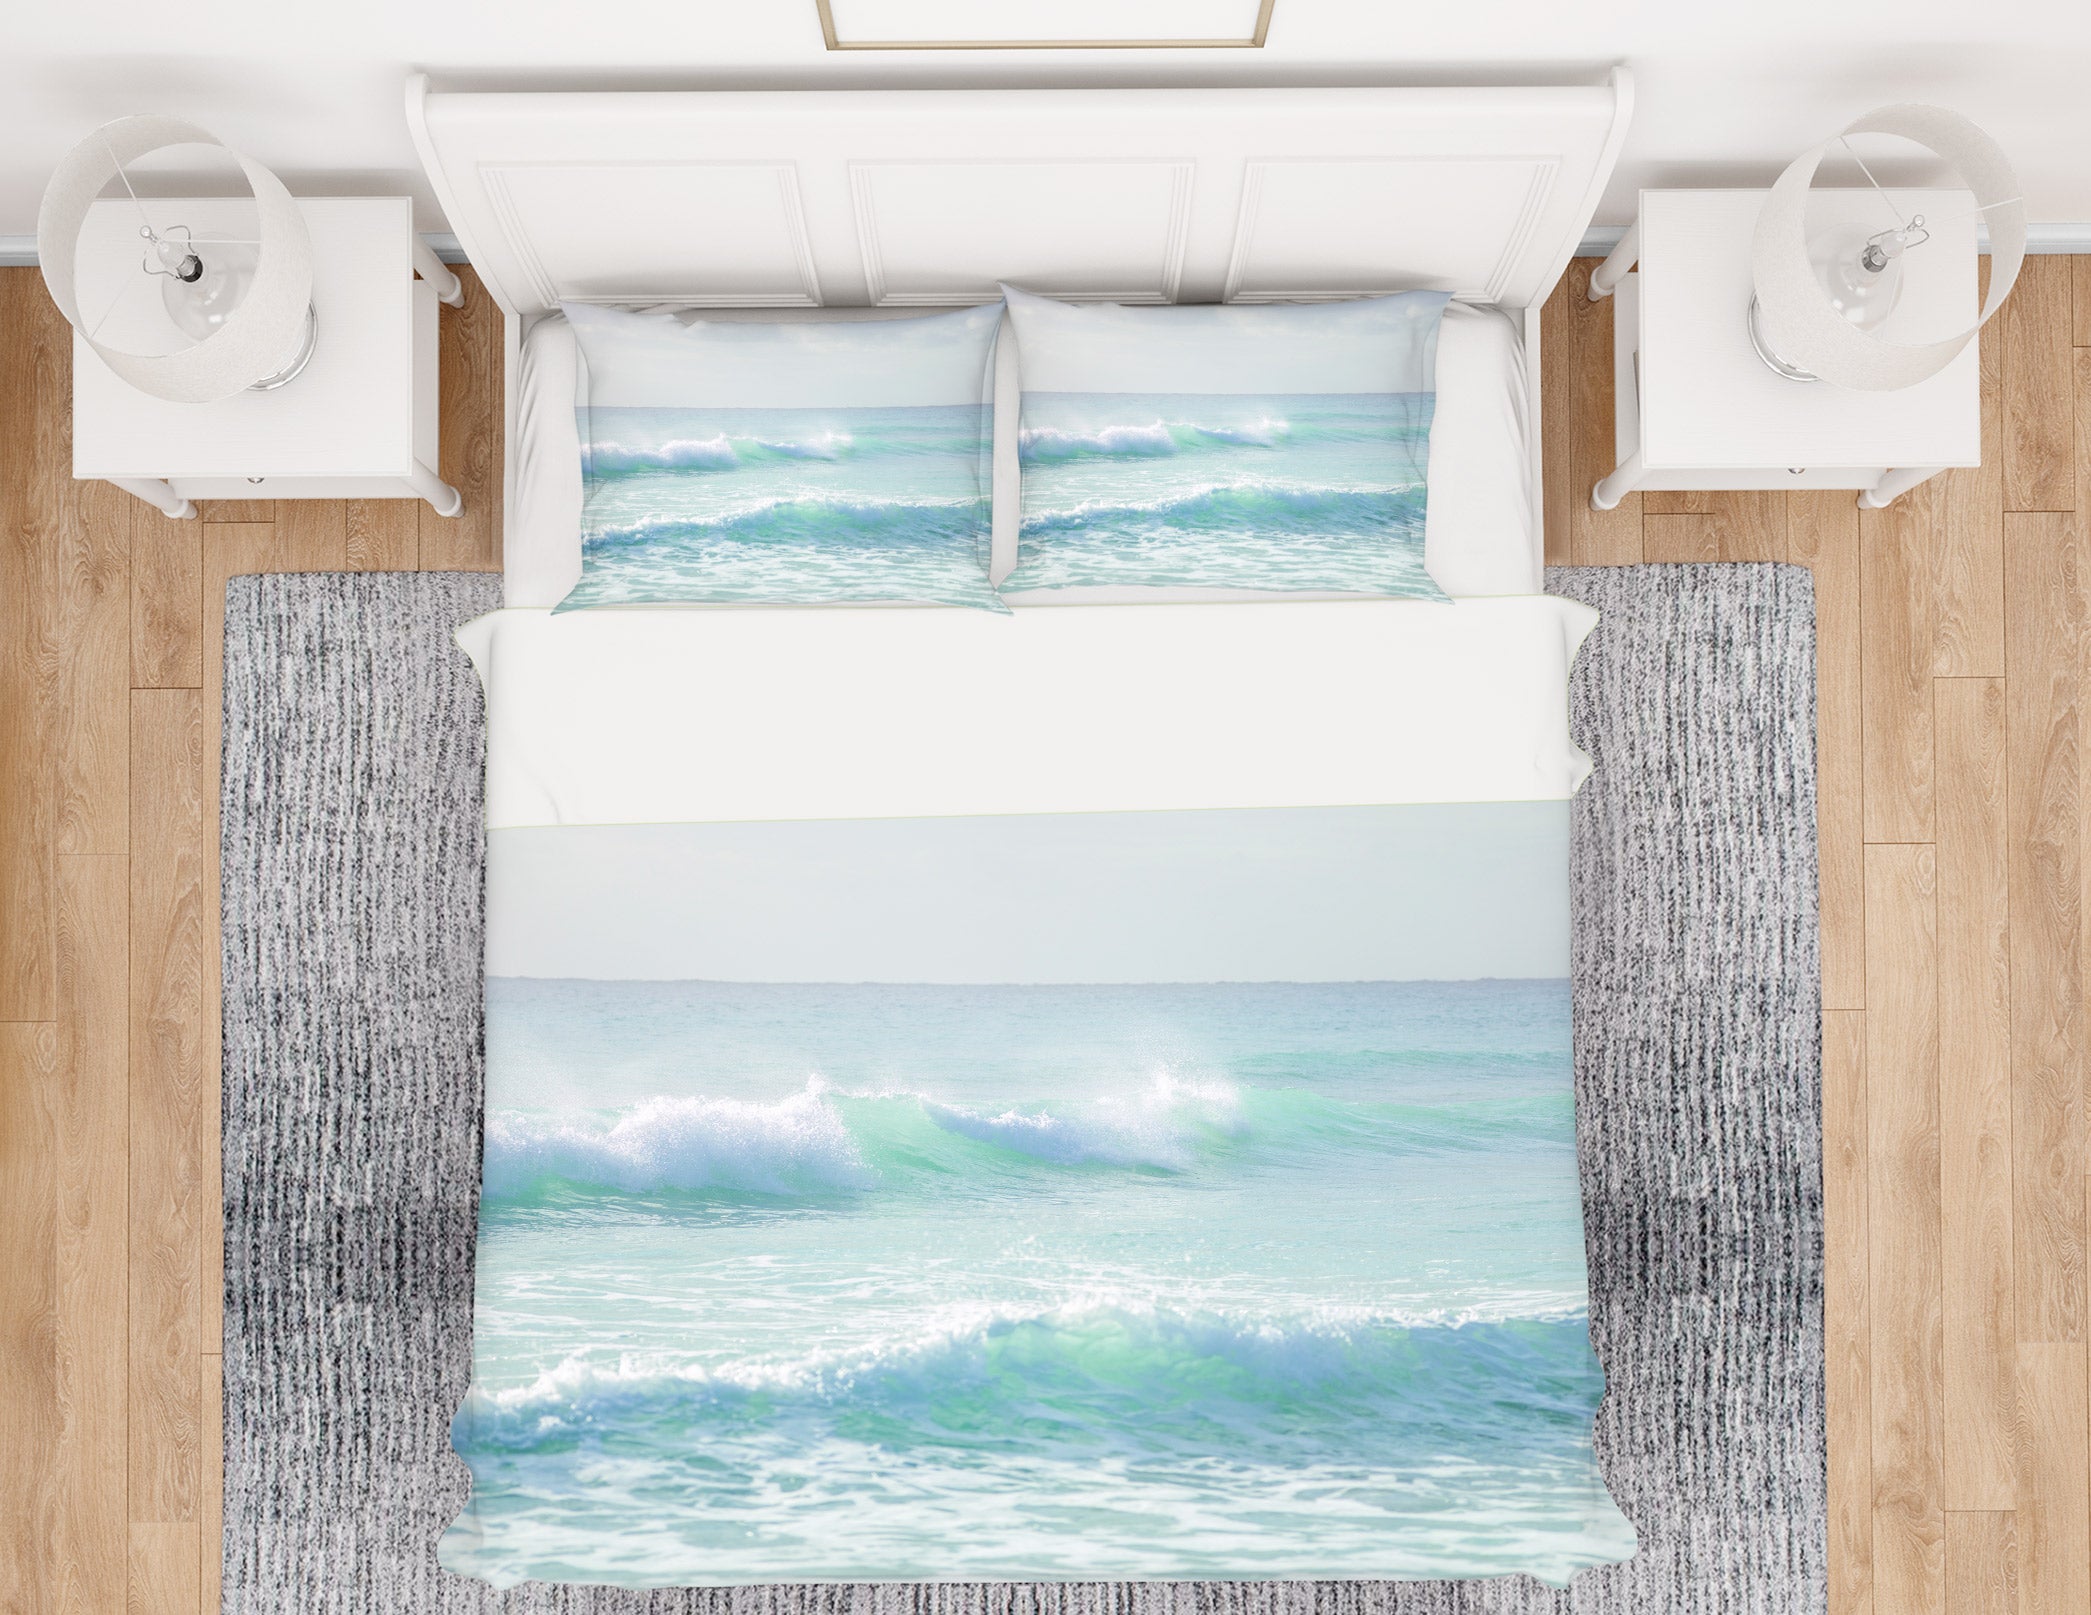 3D Vast Ocean 6934 Assaf Frank Bedding Bed Pillowcases Quilt Cover Duvet Cover